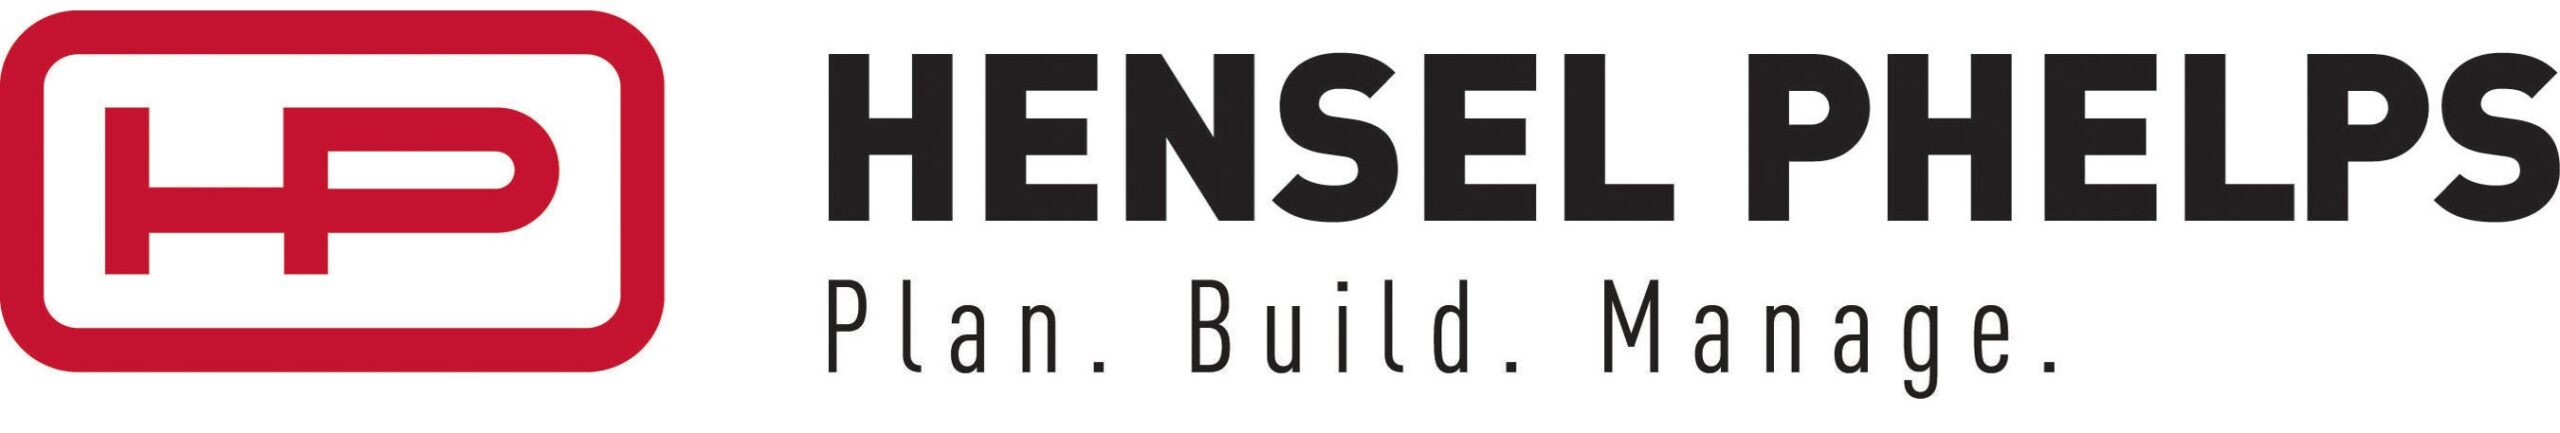 HENSEL PHELPS Plan. Build. Manage.  (PRNewsFoto/Hensel Phelps Construction Co.)